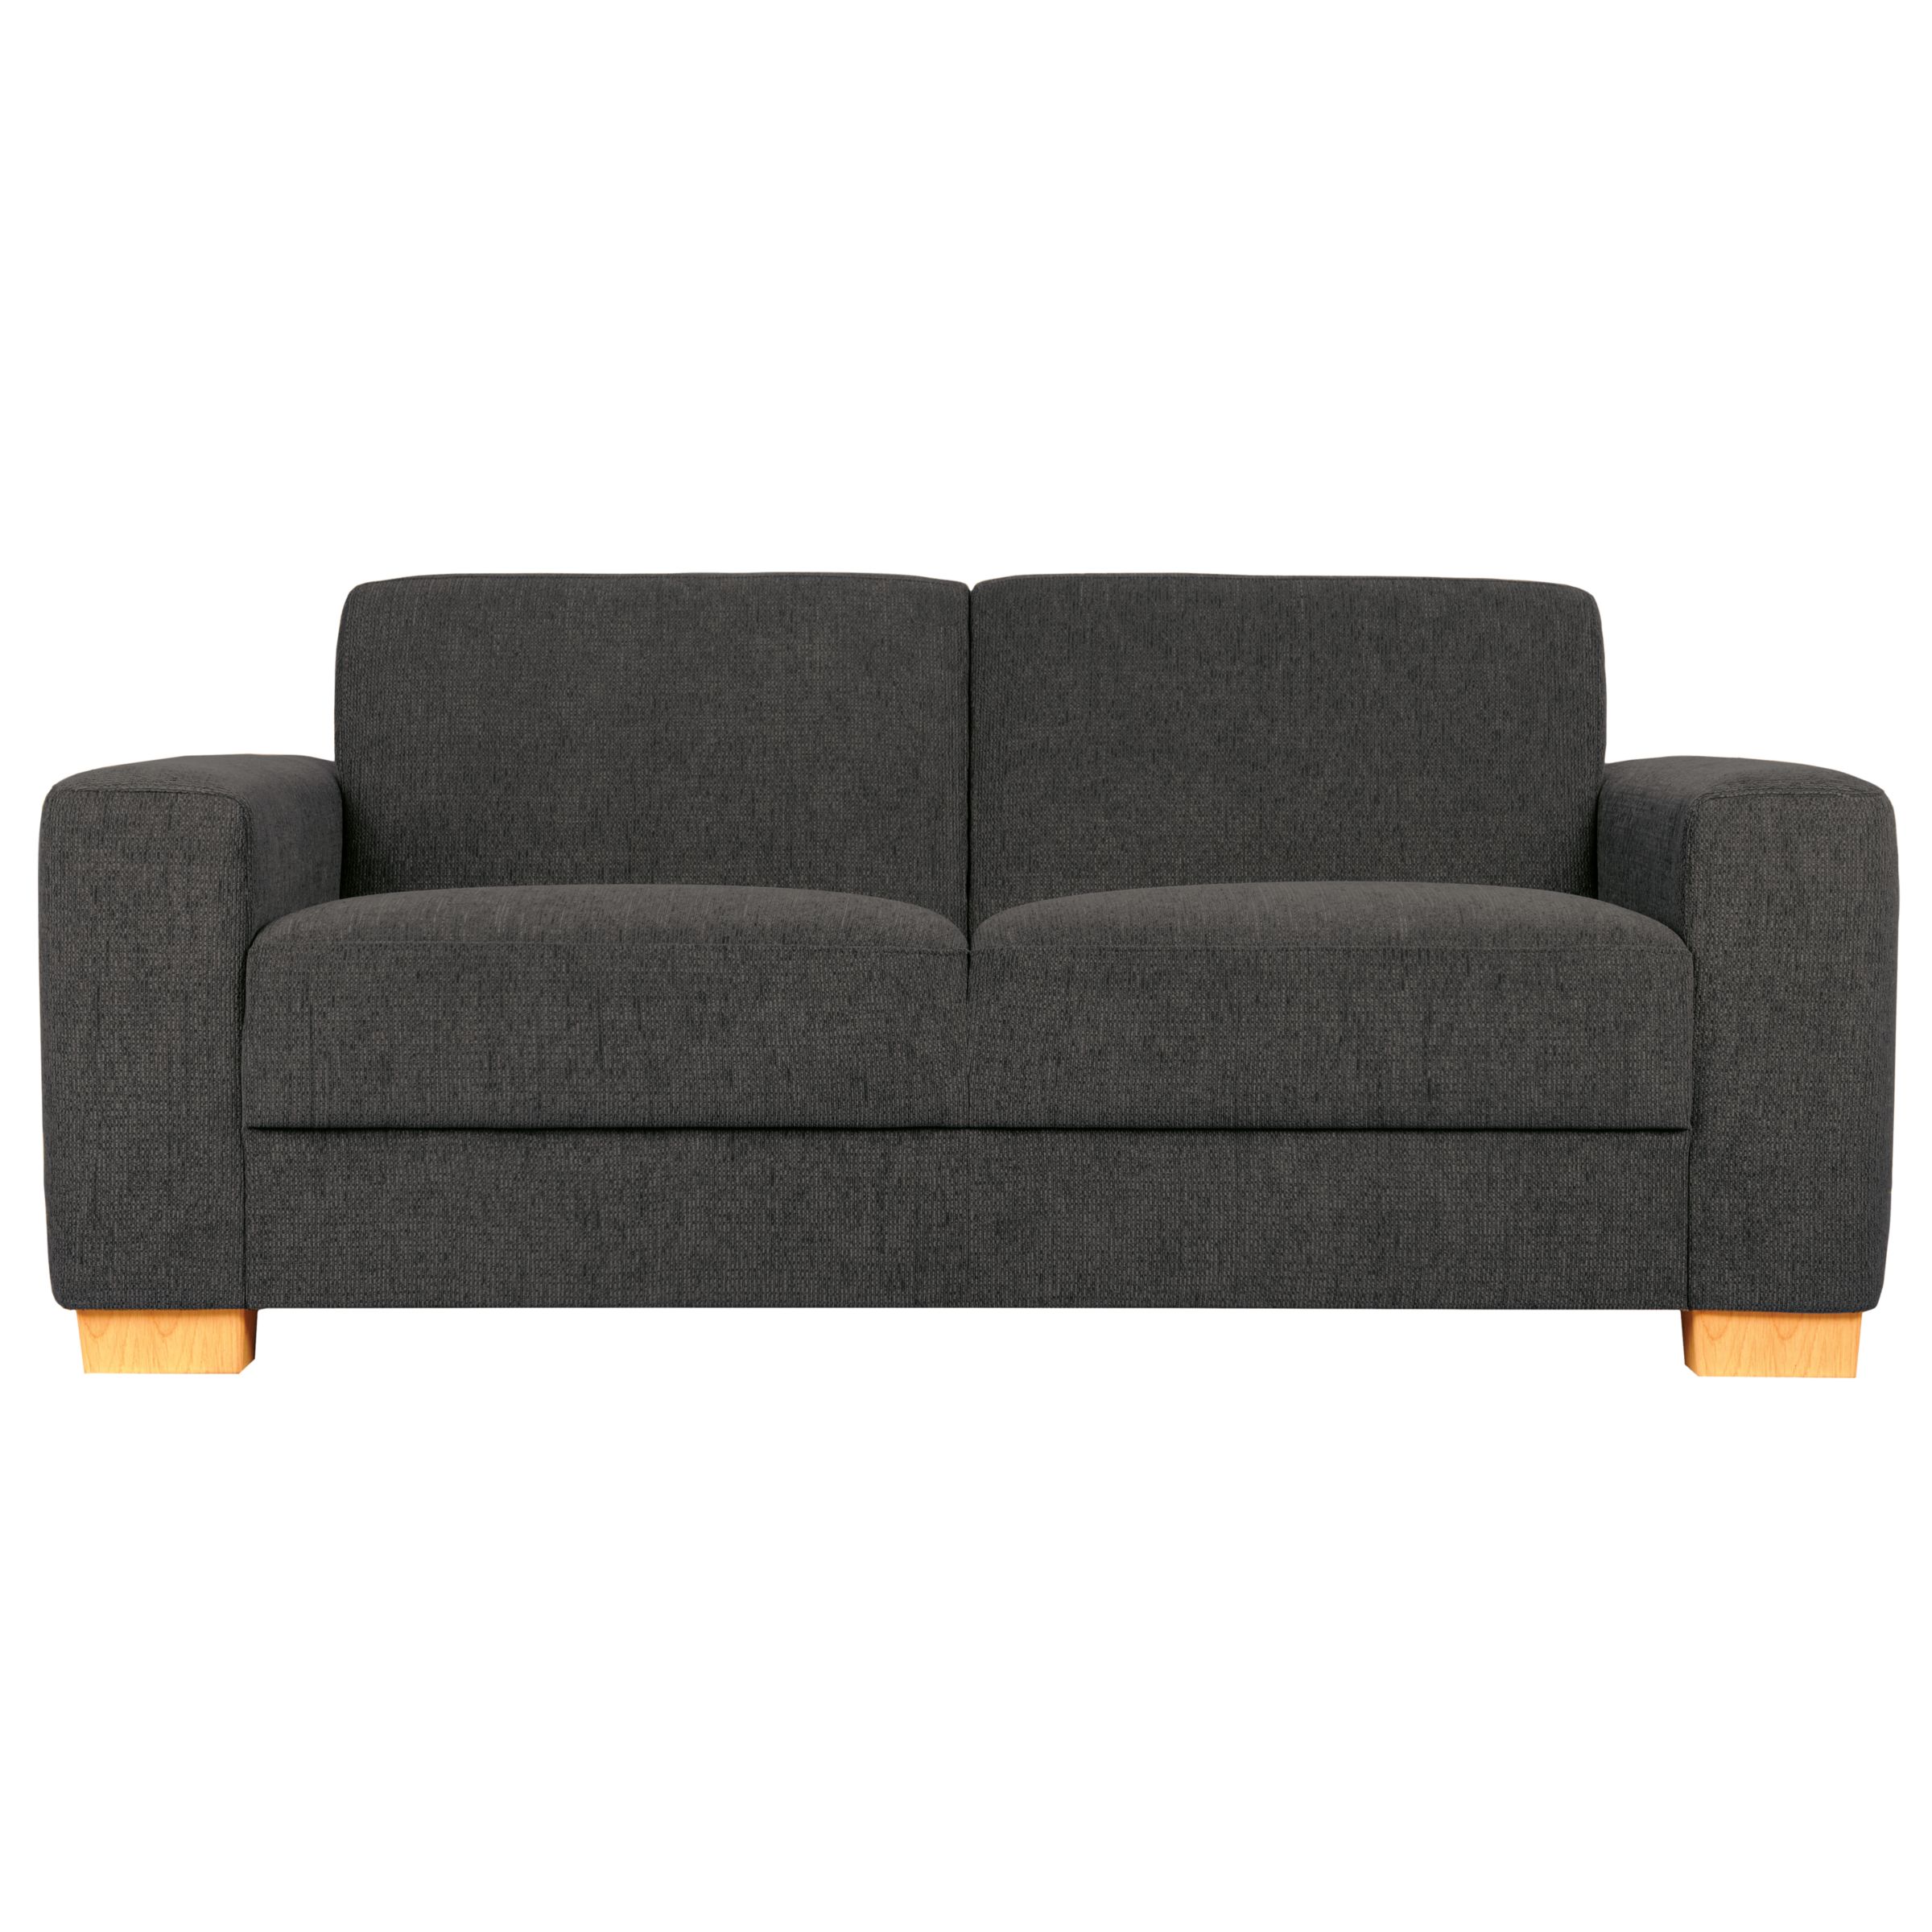 John Lewis Value Kimi Medium Sofa, Charcoal at John Lewis